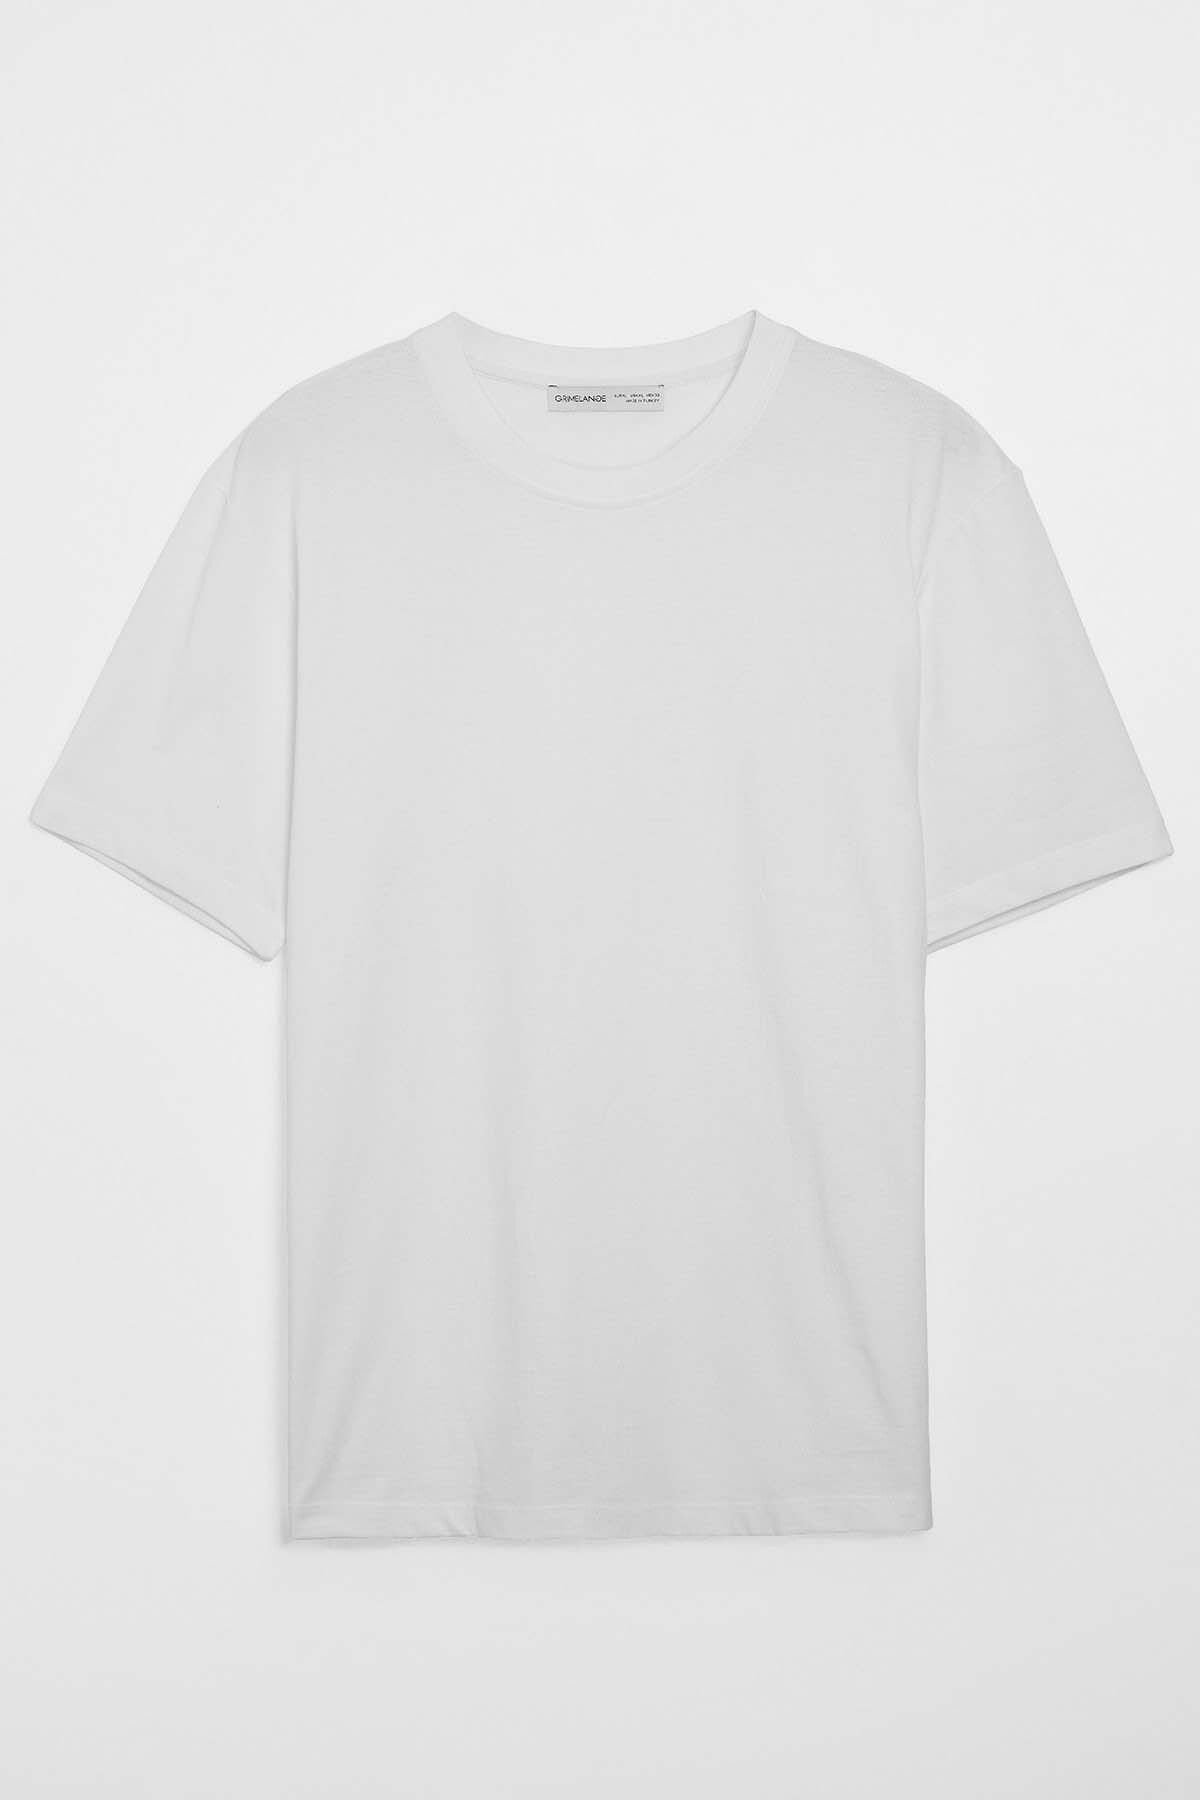 GRIMELANGE Solo Erkek Comfort Fit Kalın Dokulu Beyaz T-shirt